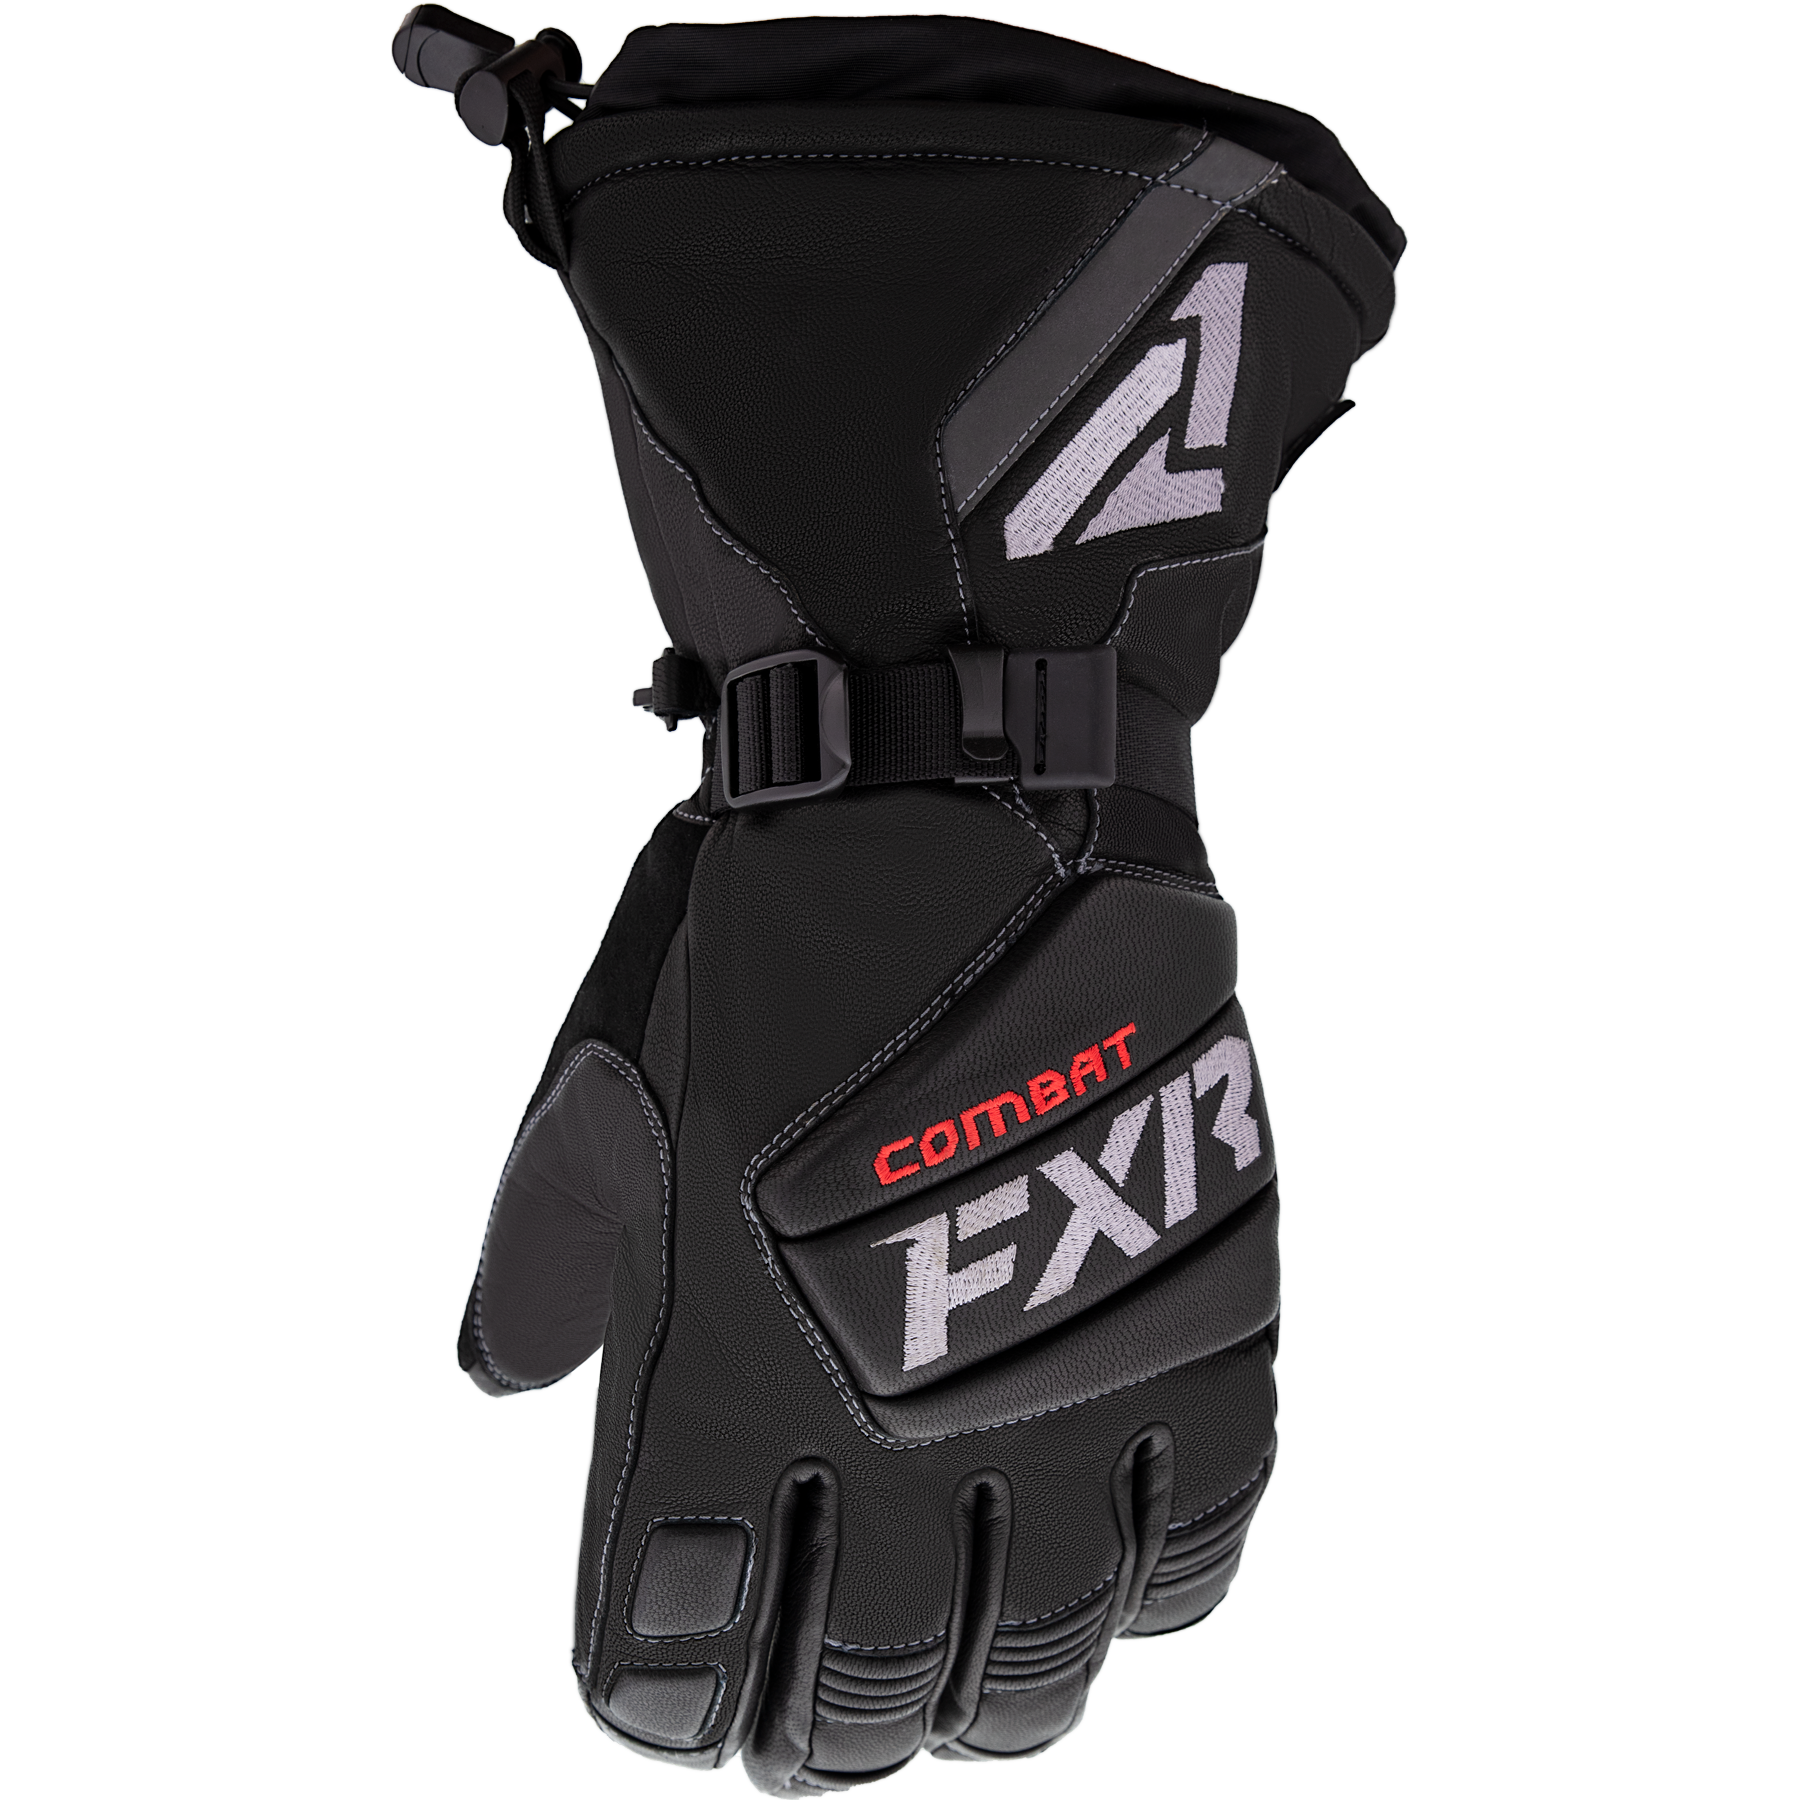 fxr racing gloves for men combat leather gauntlet